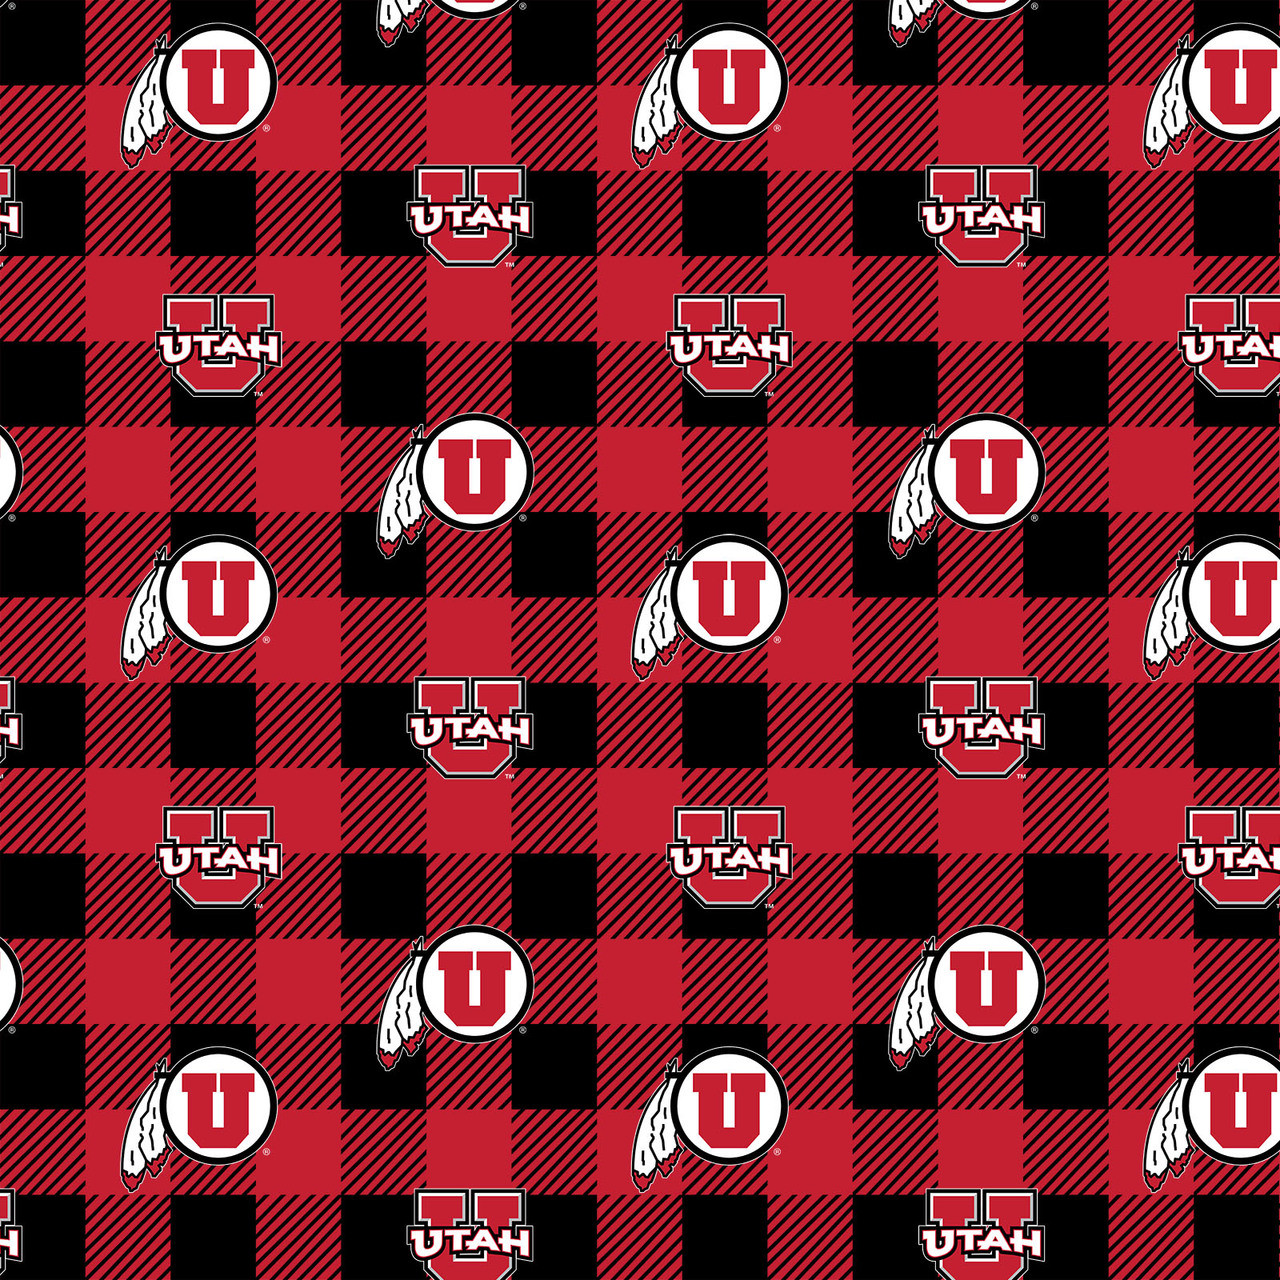 Utah Utes Fleece Fabric with Buffalo Plaid design-Sold by the Yard